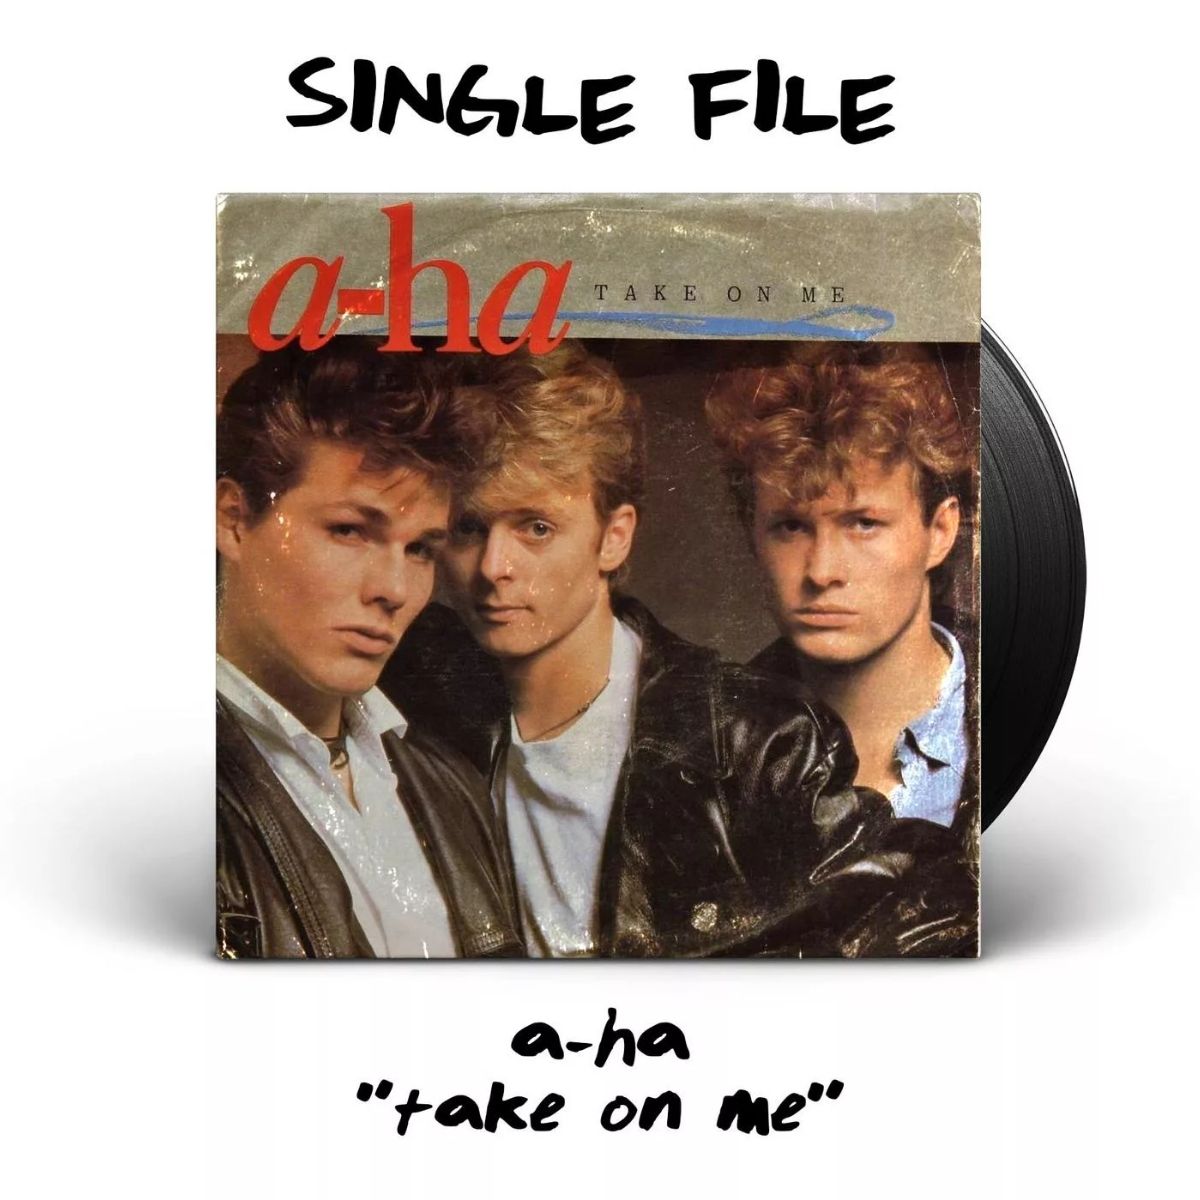 Portada del single "Take On Me" de A-ha